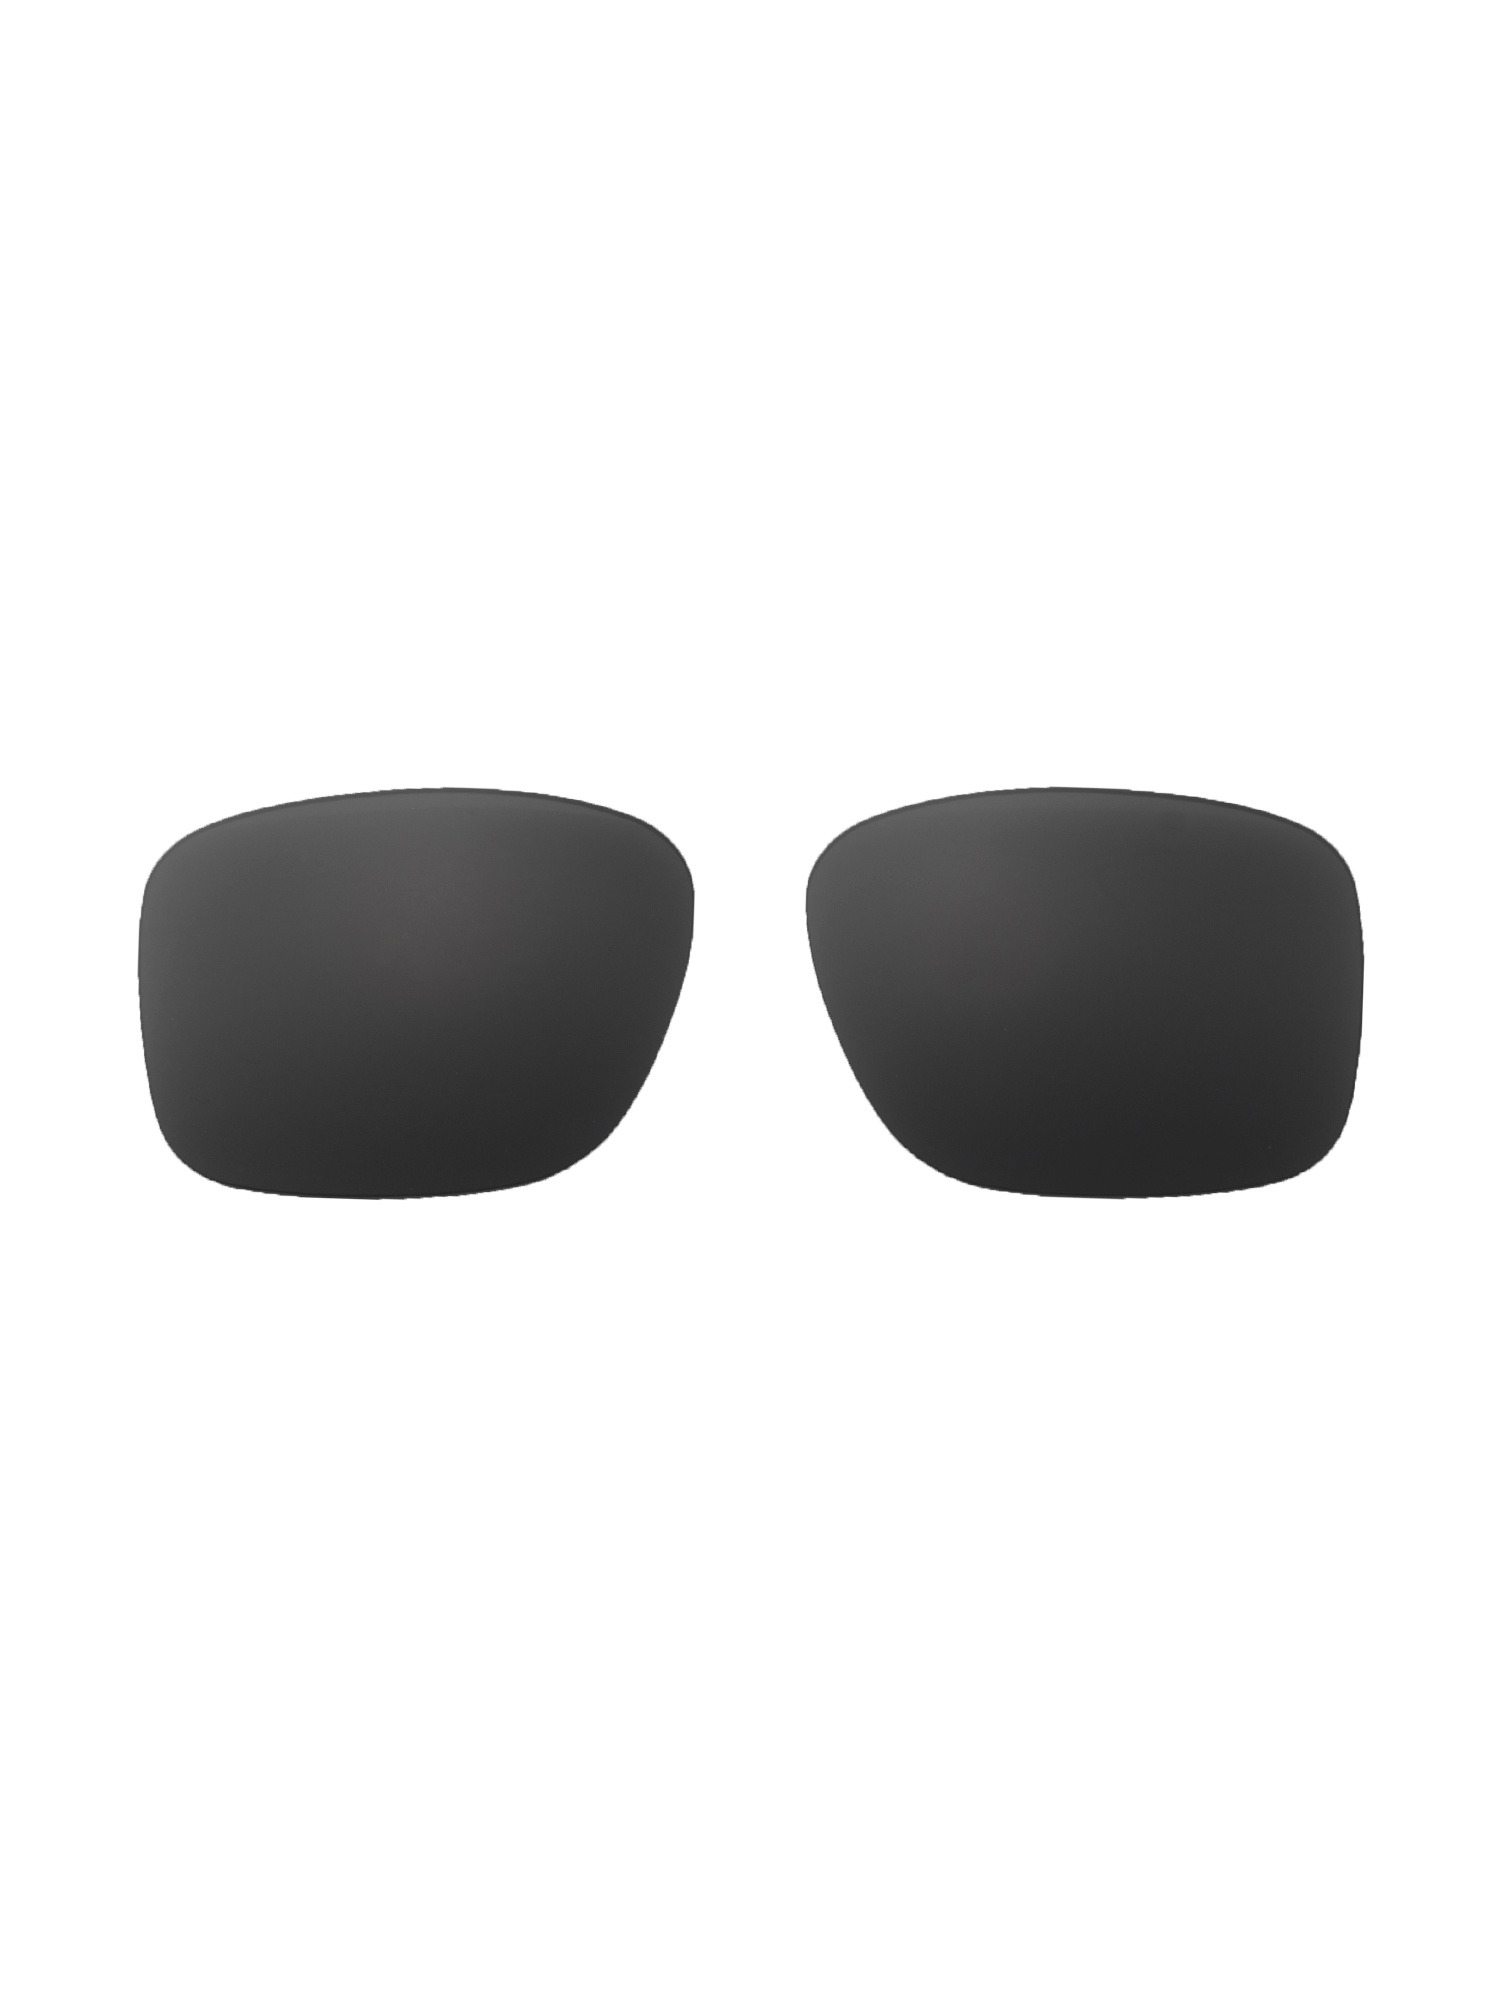 Walleva Polarized Titanium + Black Replacement Lenses For Oakley Latch SQ Sunglasses - image 4 of 6